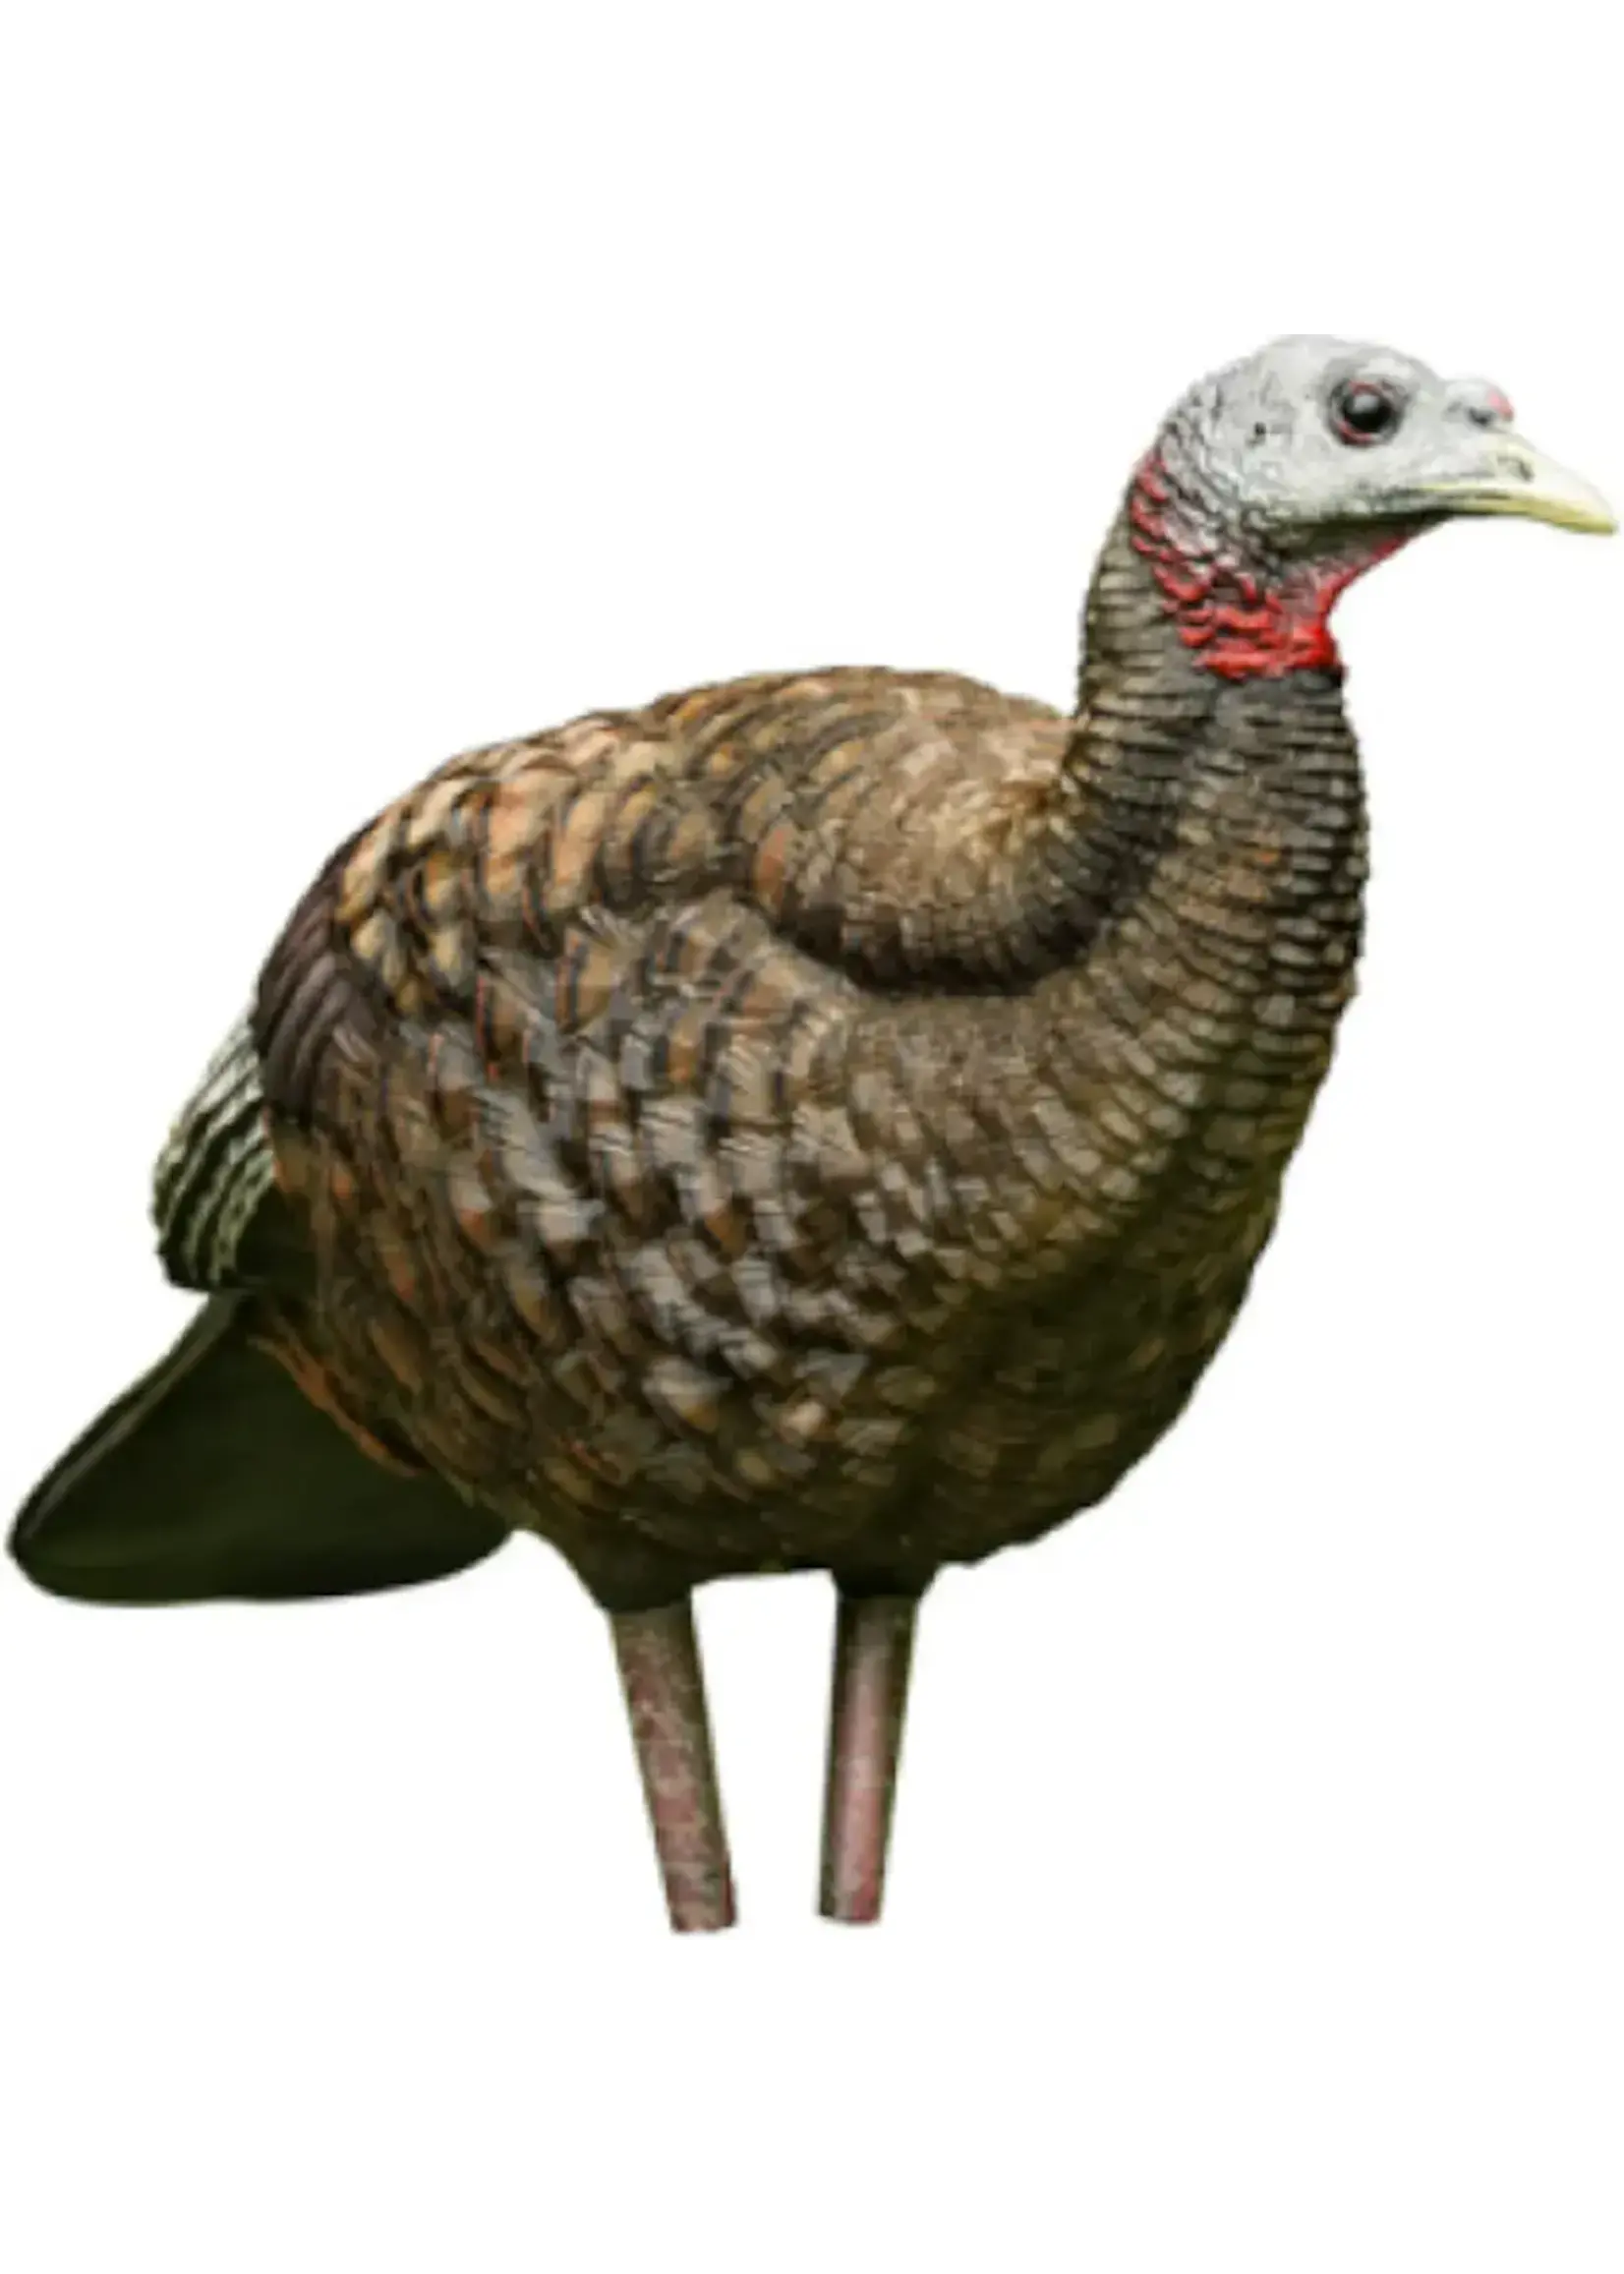 Avian X lcd breeder hen lifelike callapsible decoy